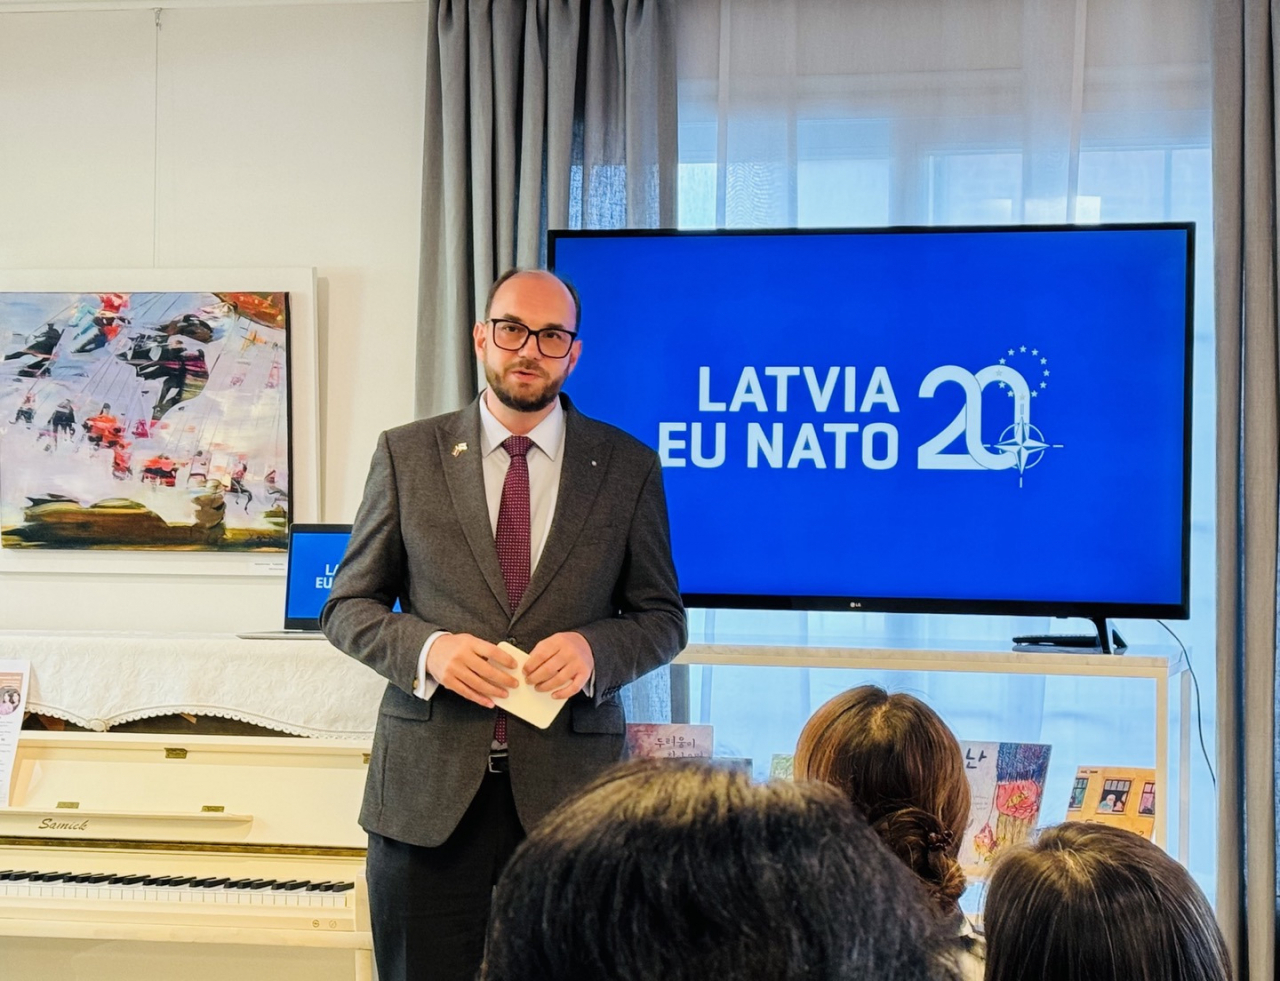 Latvian Ambassador to Korea, Aris Vigants speaks at an event commemorating 20th anniversary of EU, NATO membership at Latvian Embassy in Seoul on Wednesday.(Sanjay Kumar/The Korea Herald)